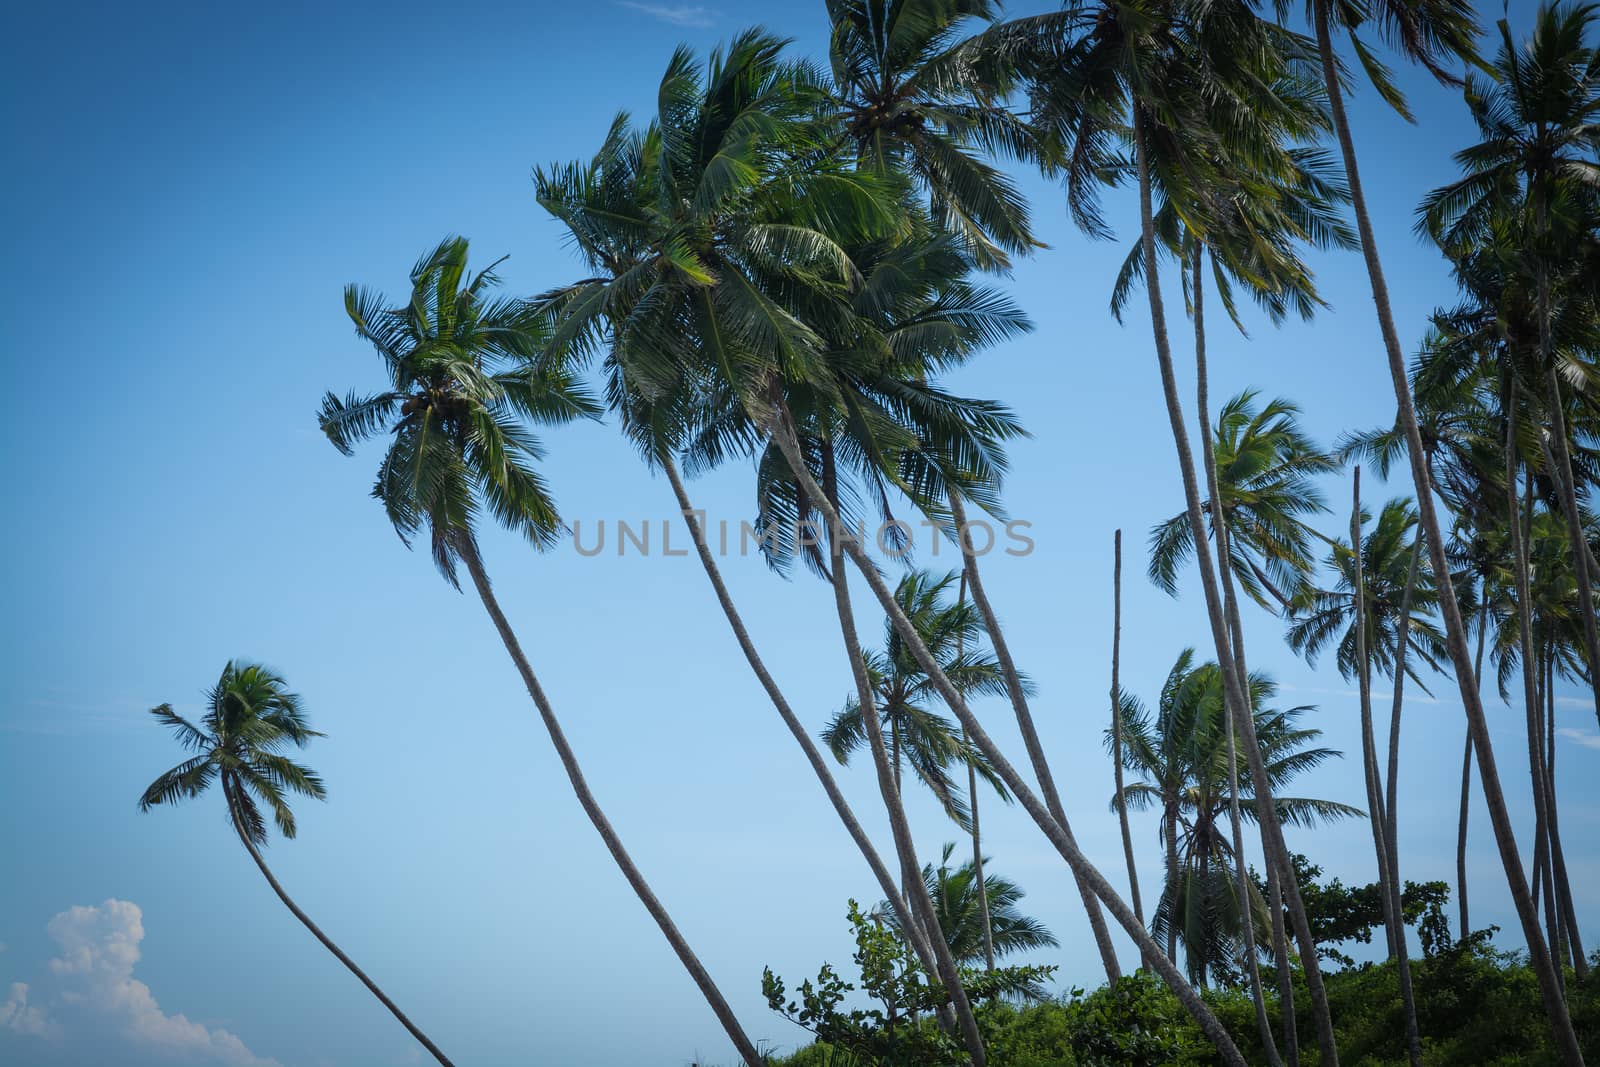 Coconut palms. Coconut palm trees and blue sky. Southern Province, Sri Lanka, Asia.